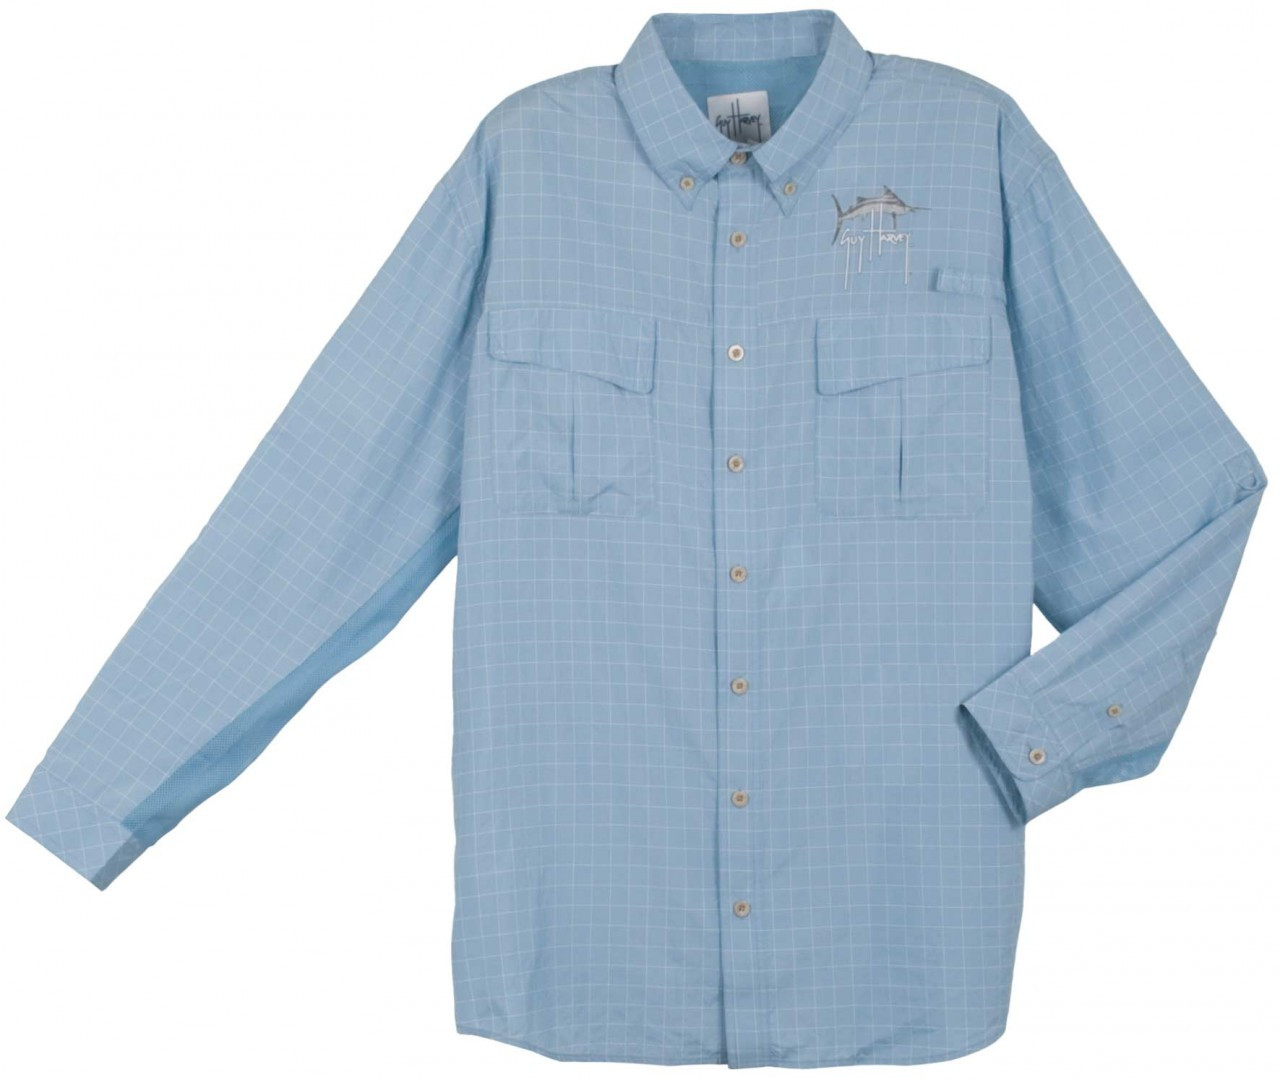 Guy Harvey Marlin Plaid Long Sleeve Technical Fishing Shirt in Blue,  Charcoal, Gray or Tan